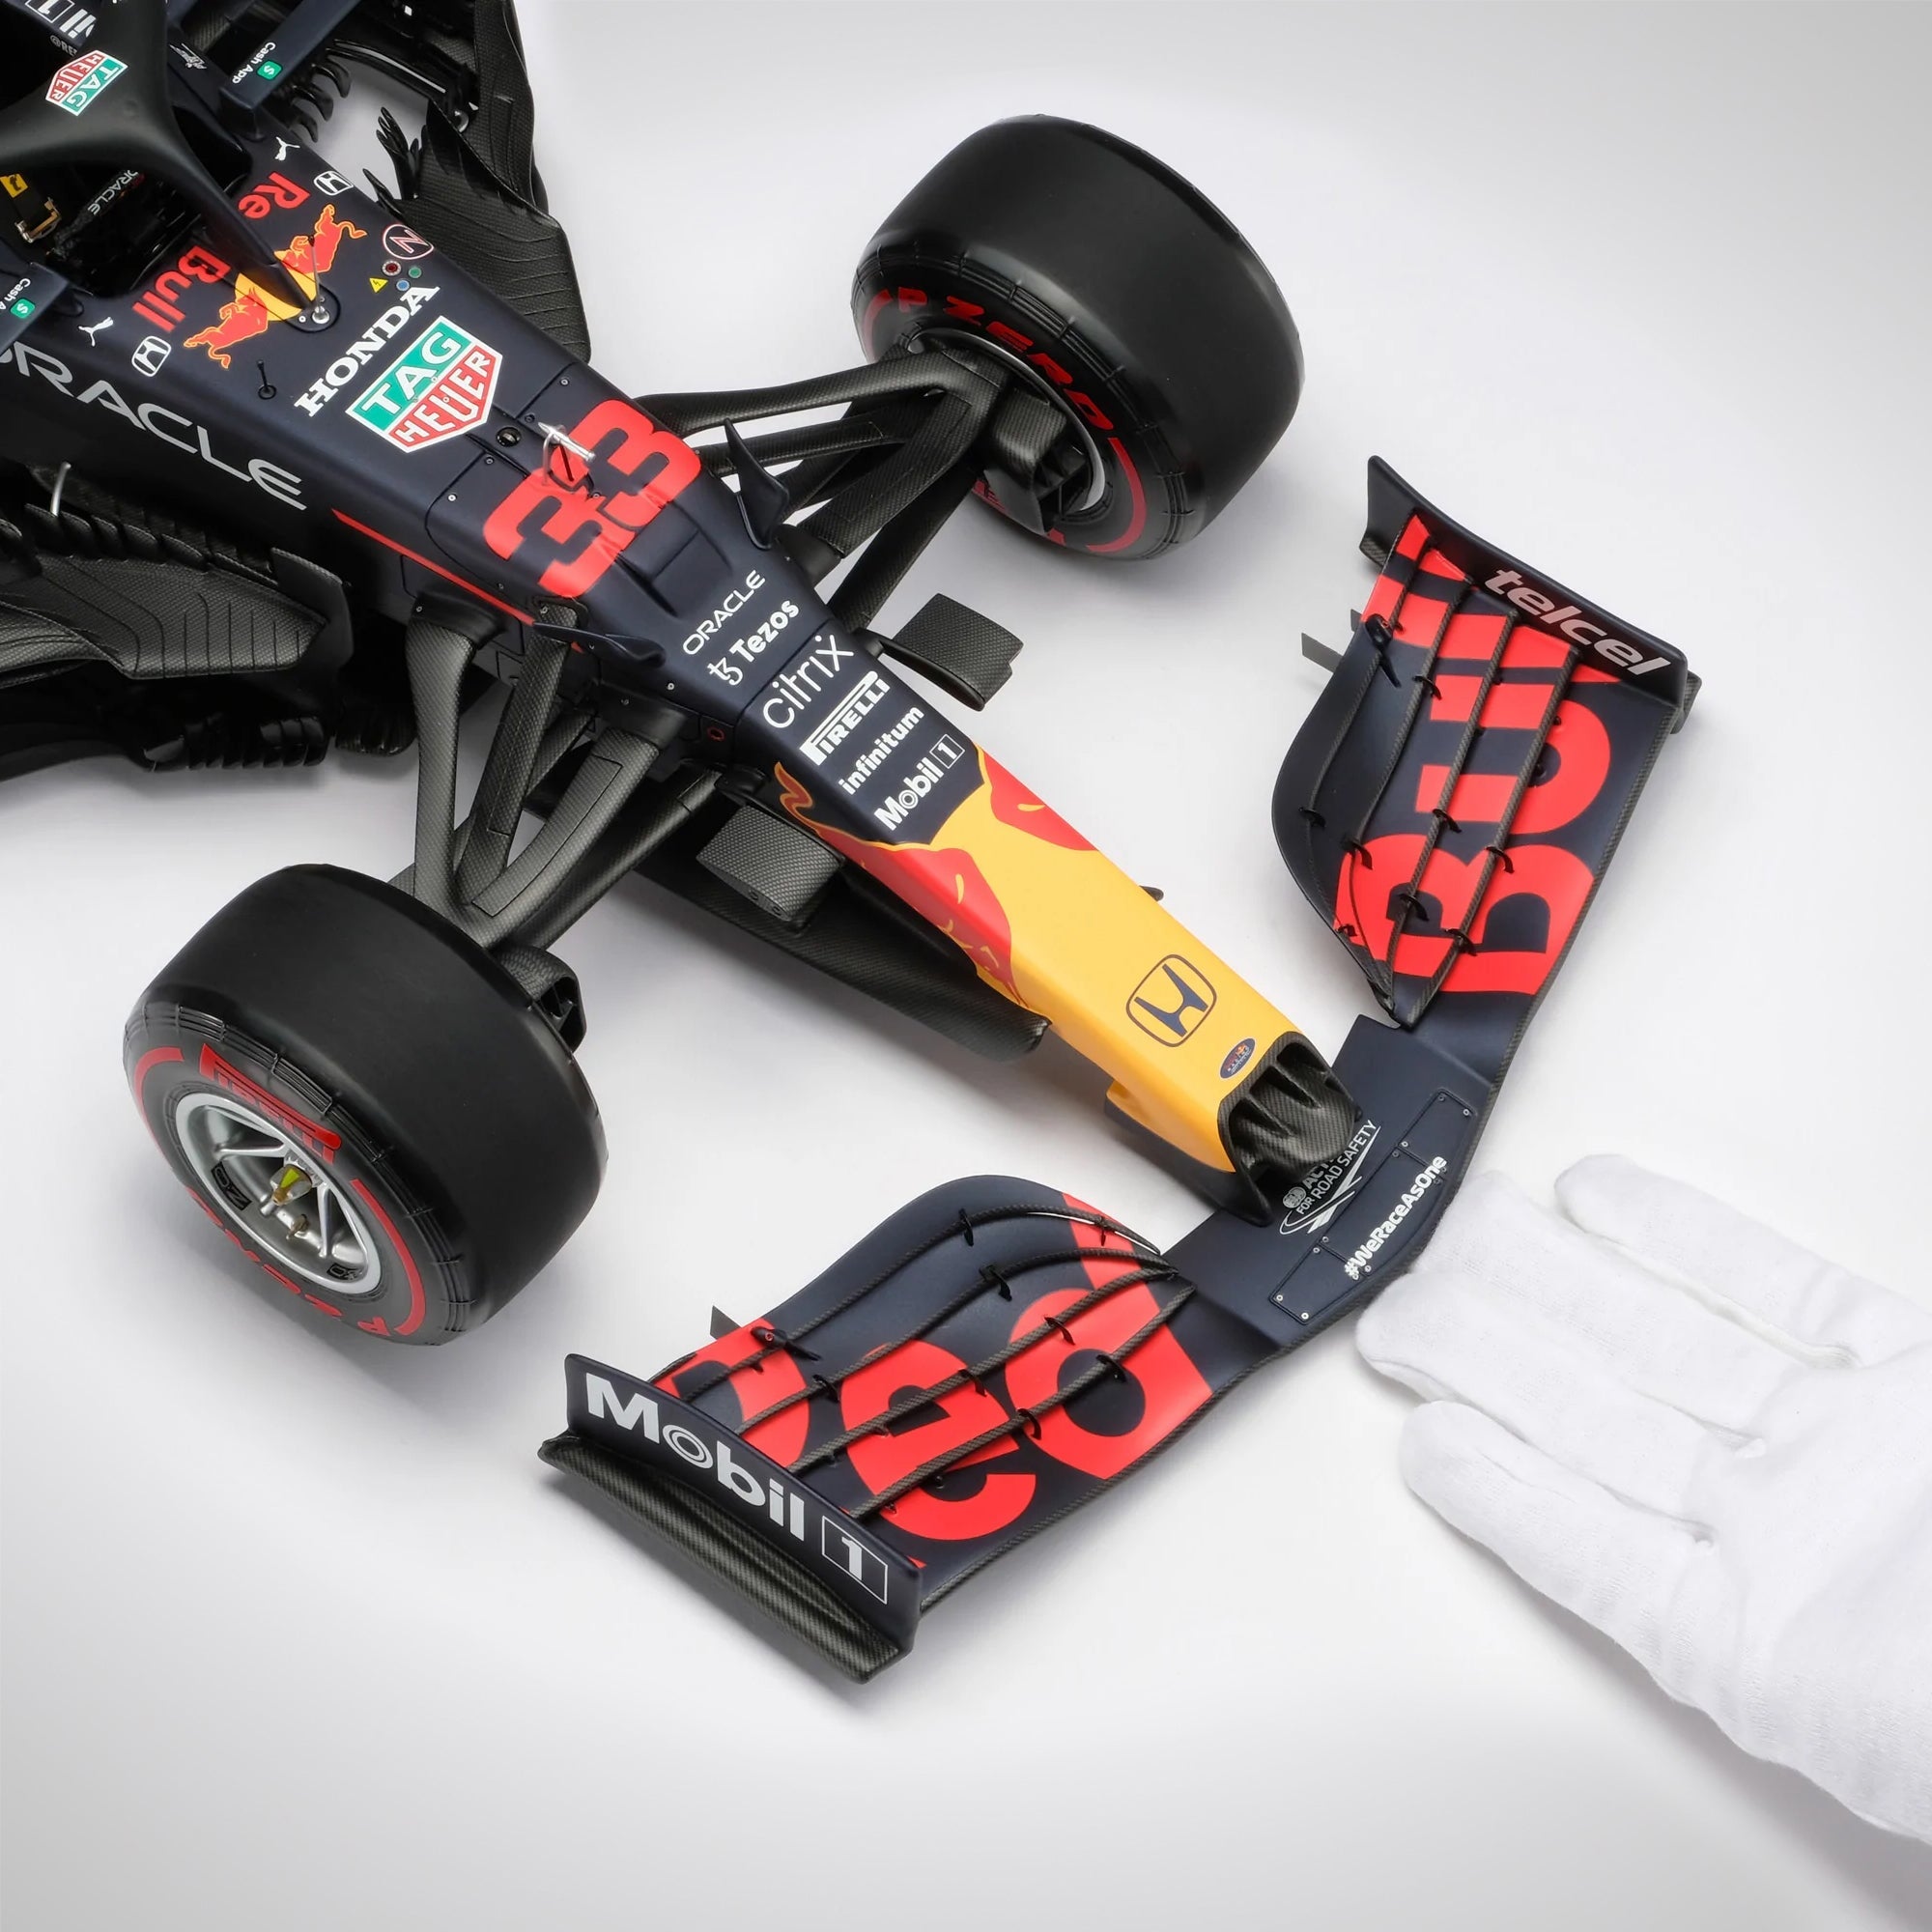 Max Verstappen 2021 Oracle Red Bull Racing F1 Team RB16B 1:8 Scale Model – Abu Dhabi GP 